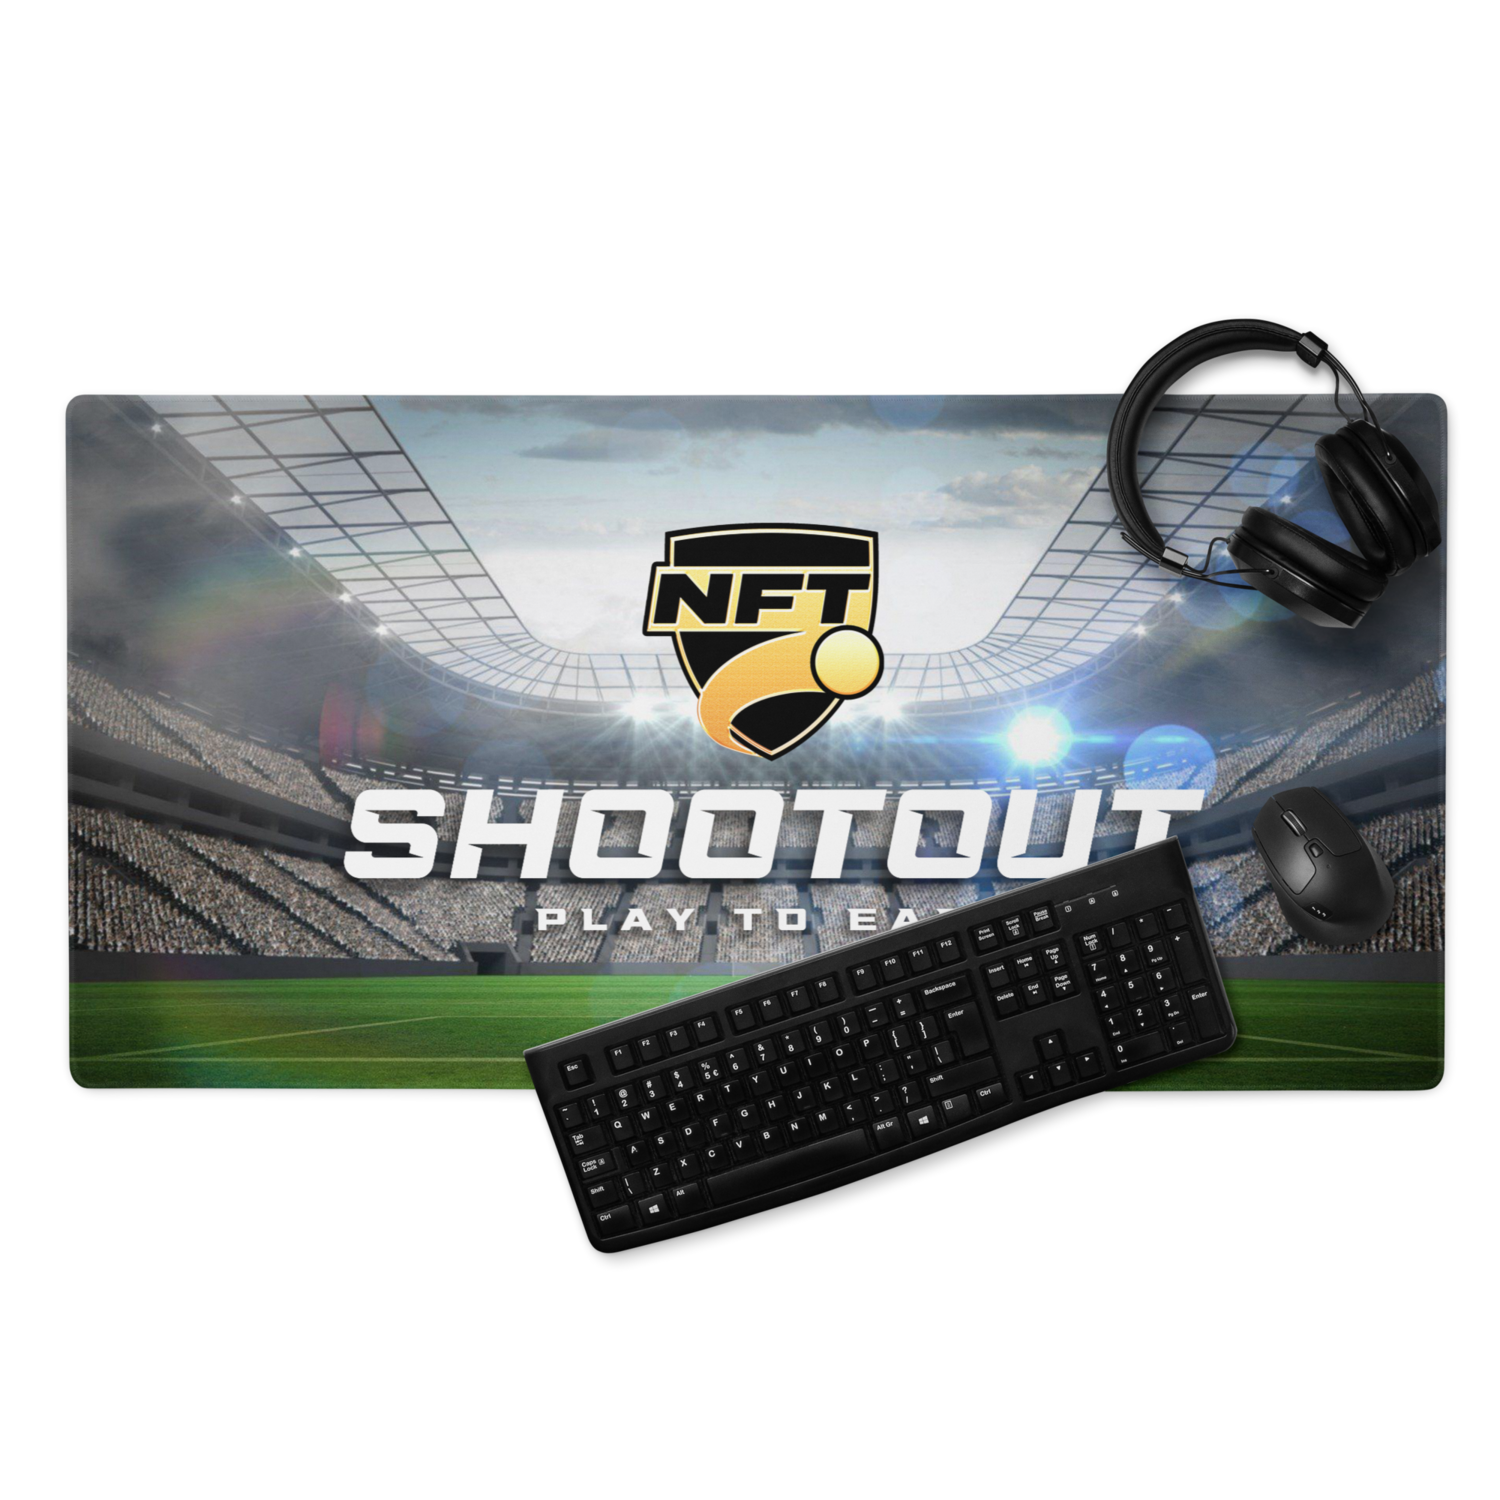 NFT Shootout Gaming mouse pad